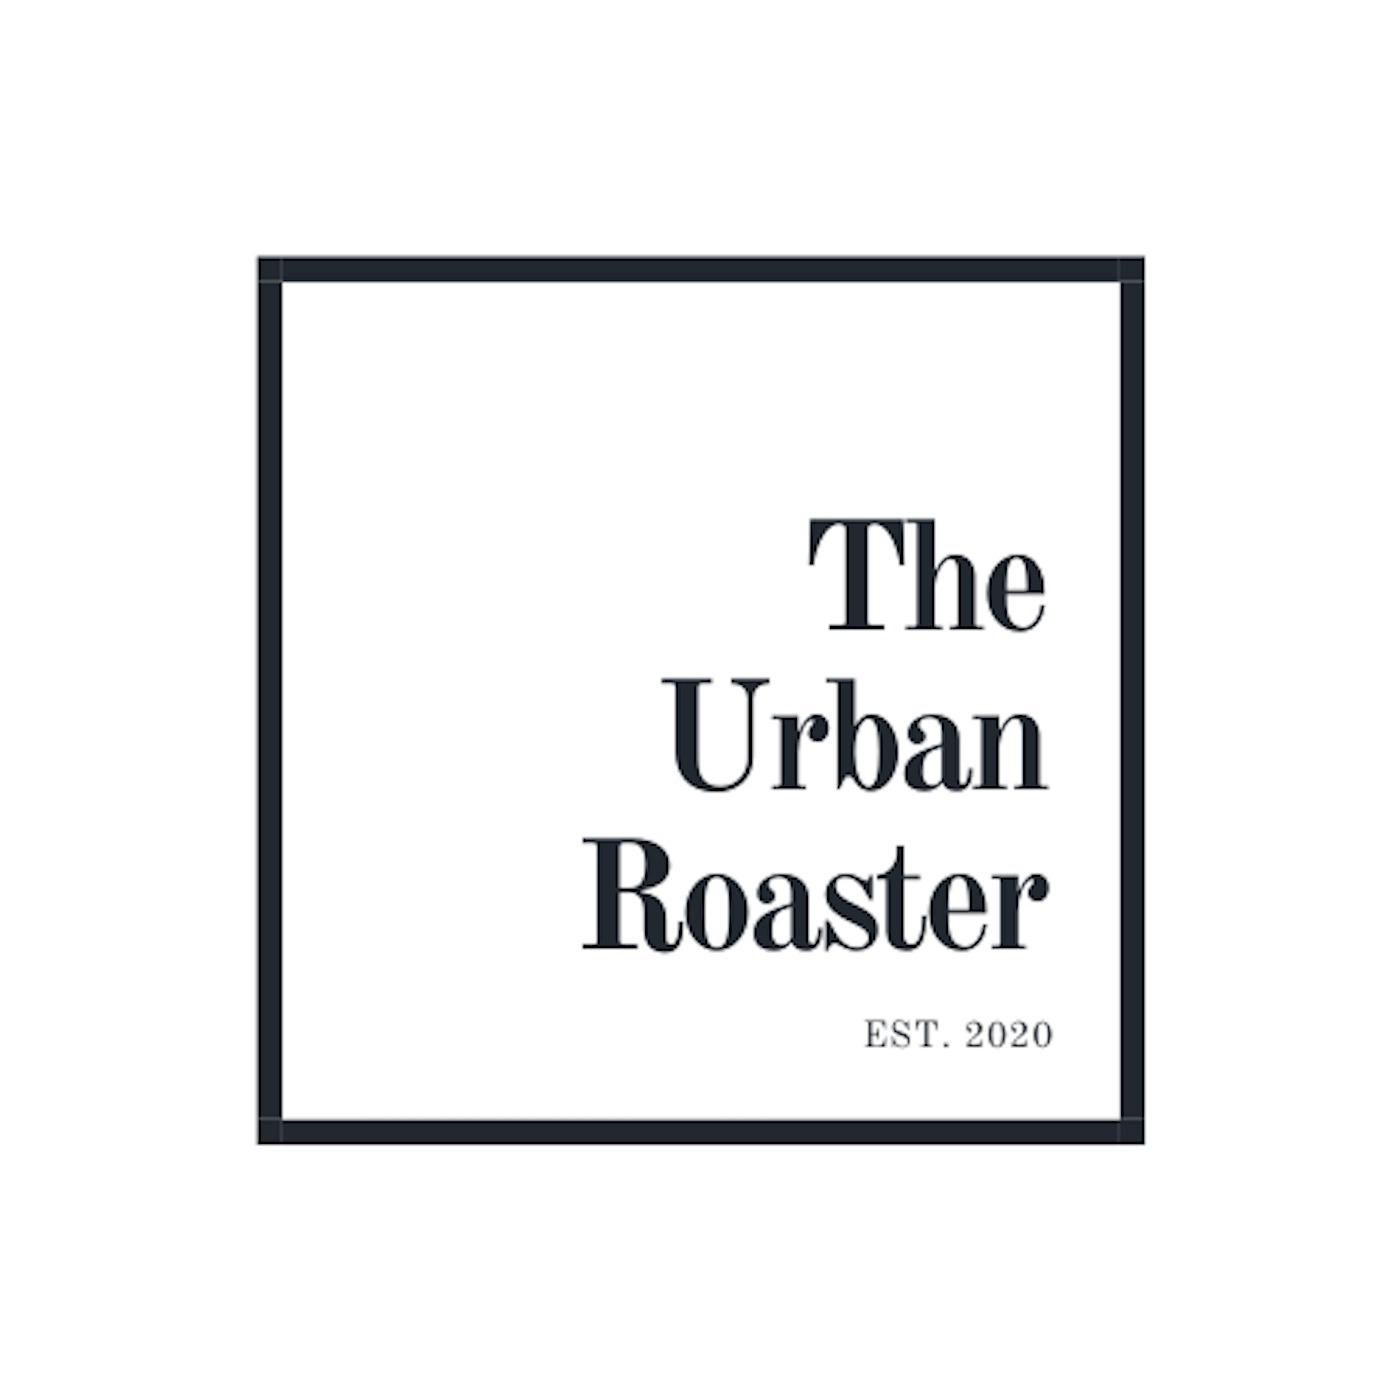 The Urban Roaster